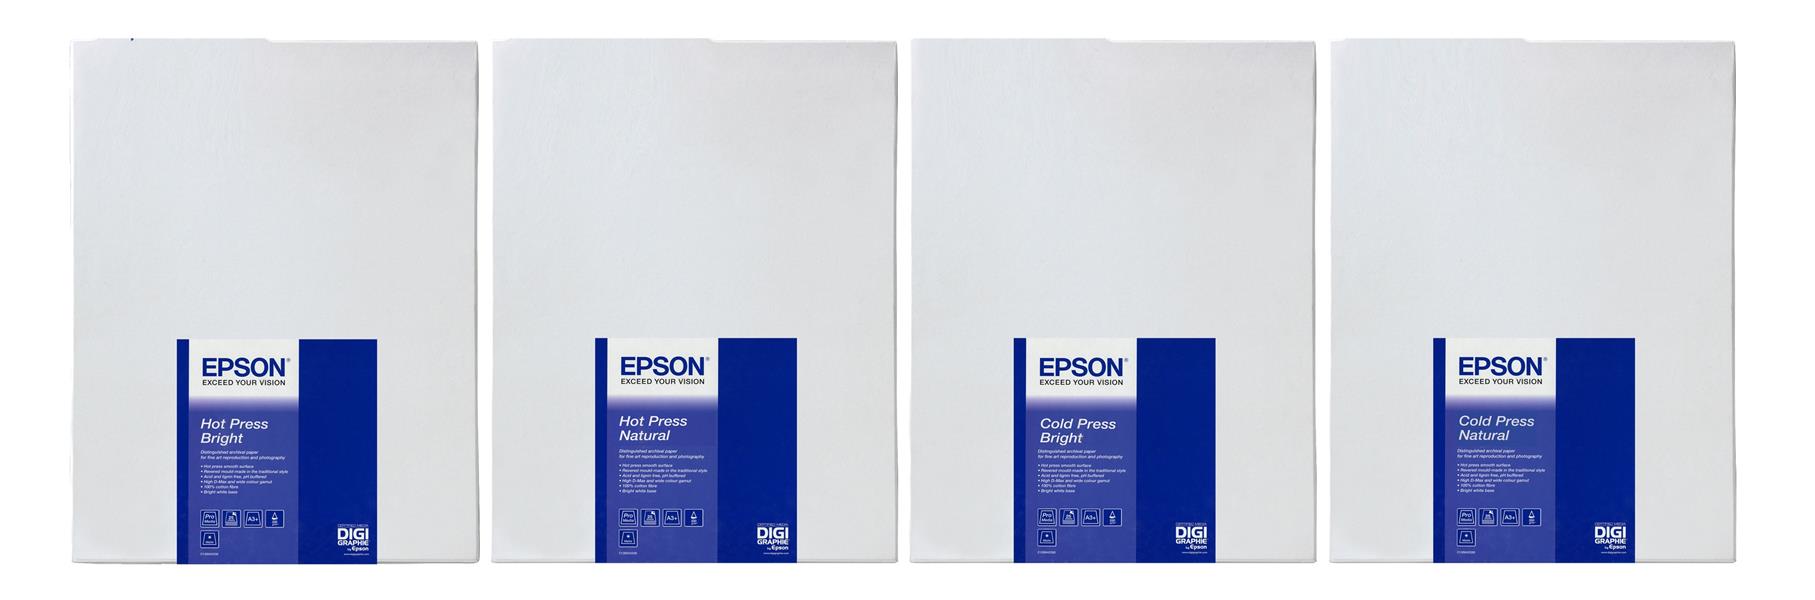 Epson Hot Press Natural A3+